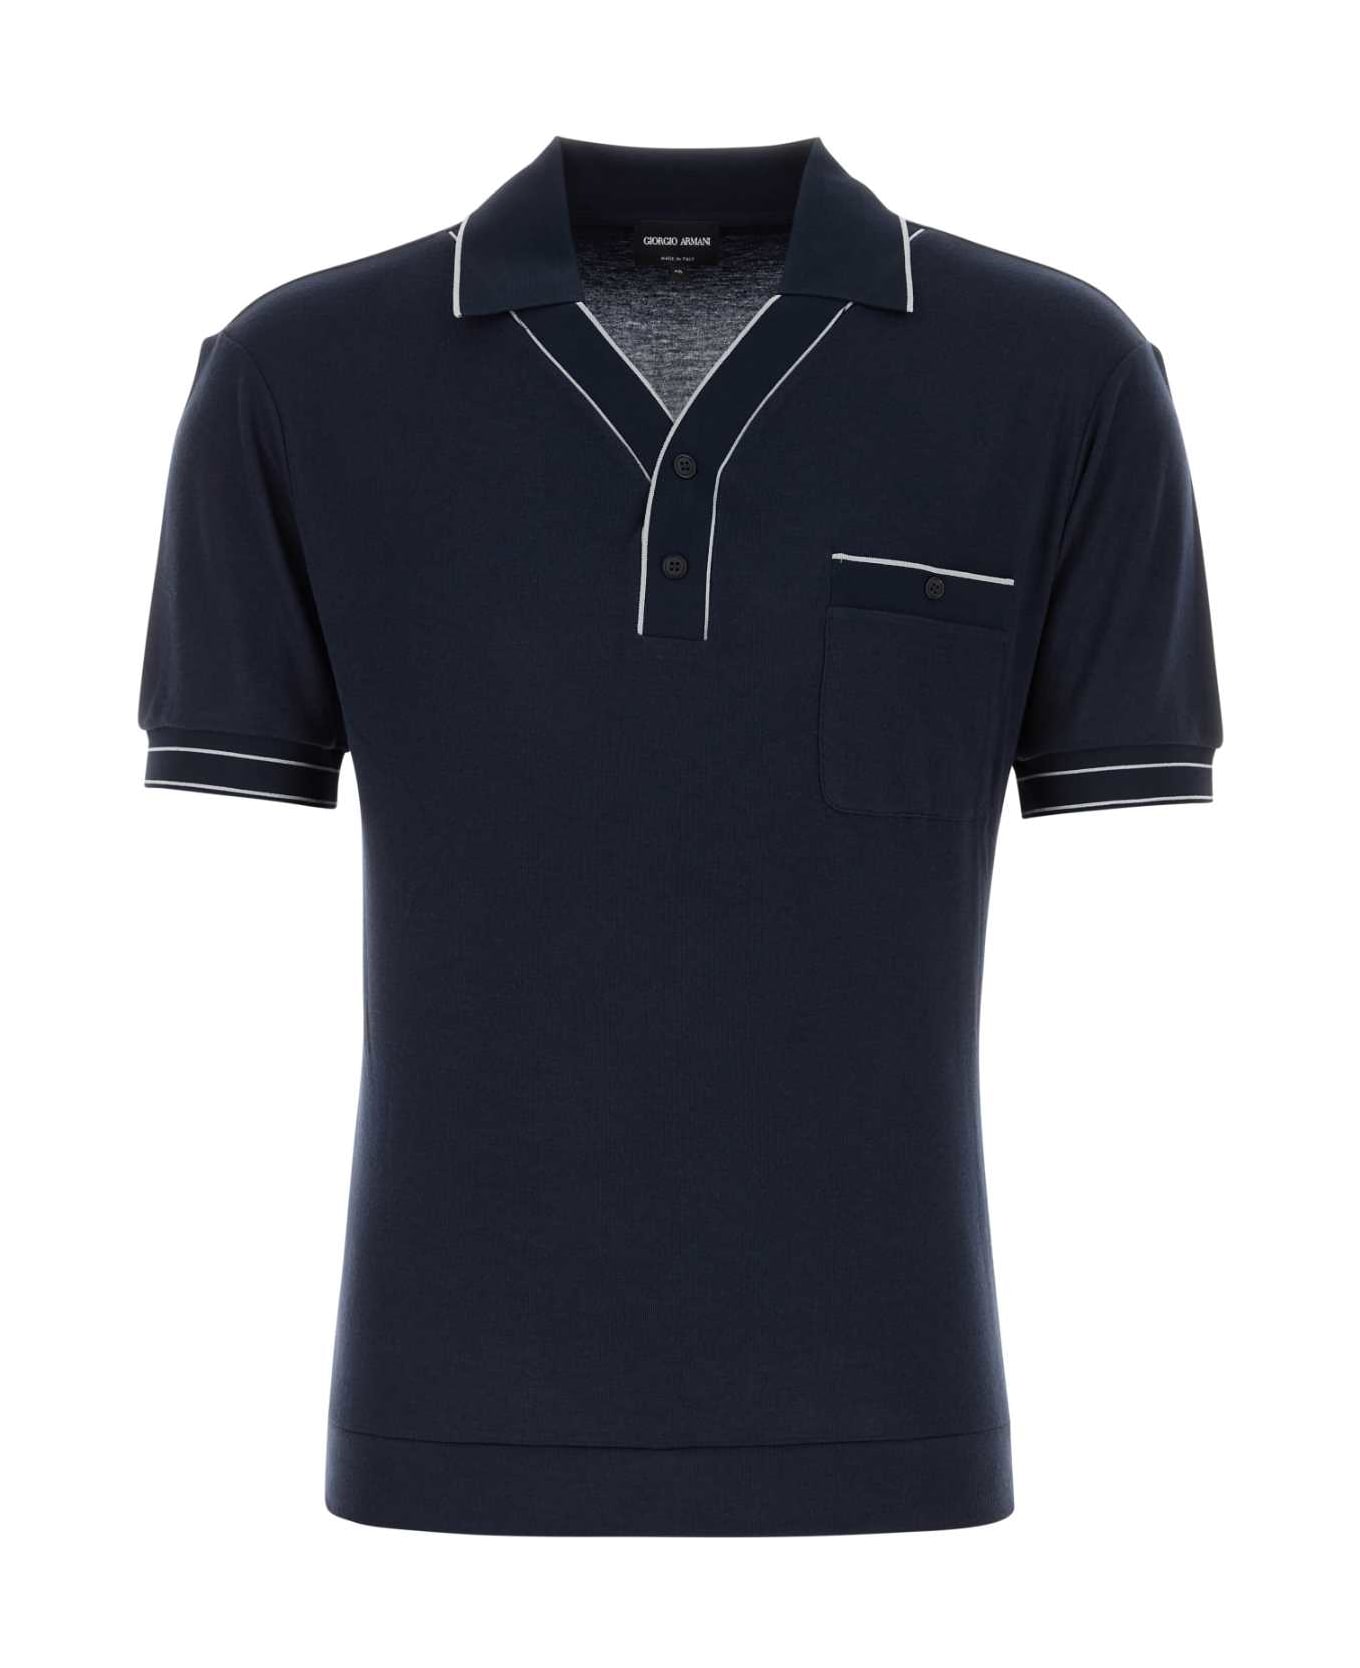 Giorgio Armani Midnight Bue Viscose Blend Polo Shirt - NAVY ポロシャツ